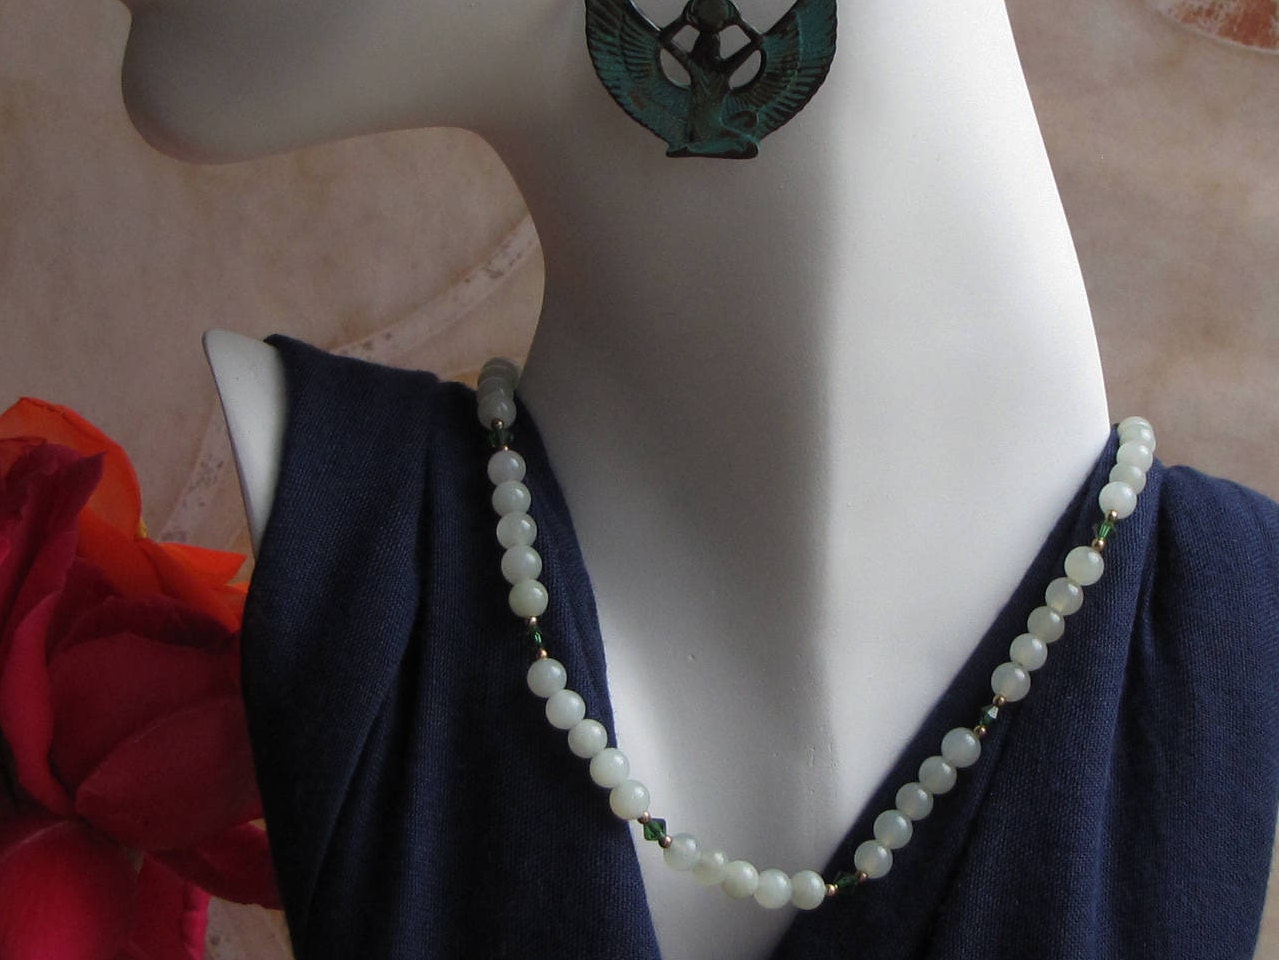 New Jade necklace